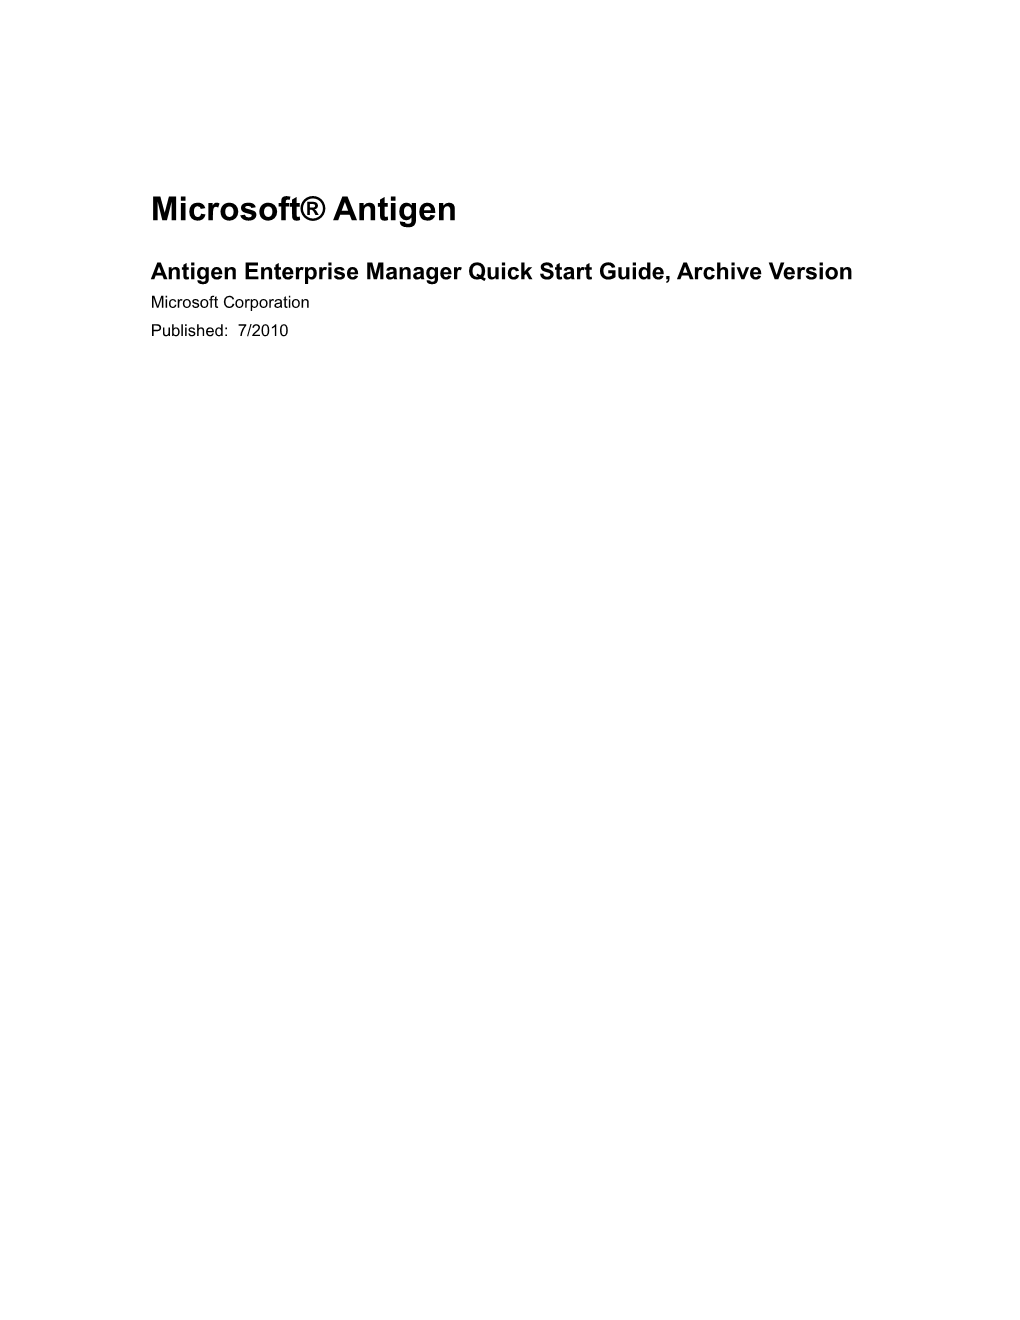 Antigen Enterprise Manager Quick Start Guide, Archive Version